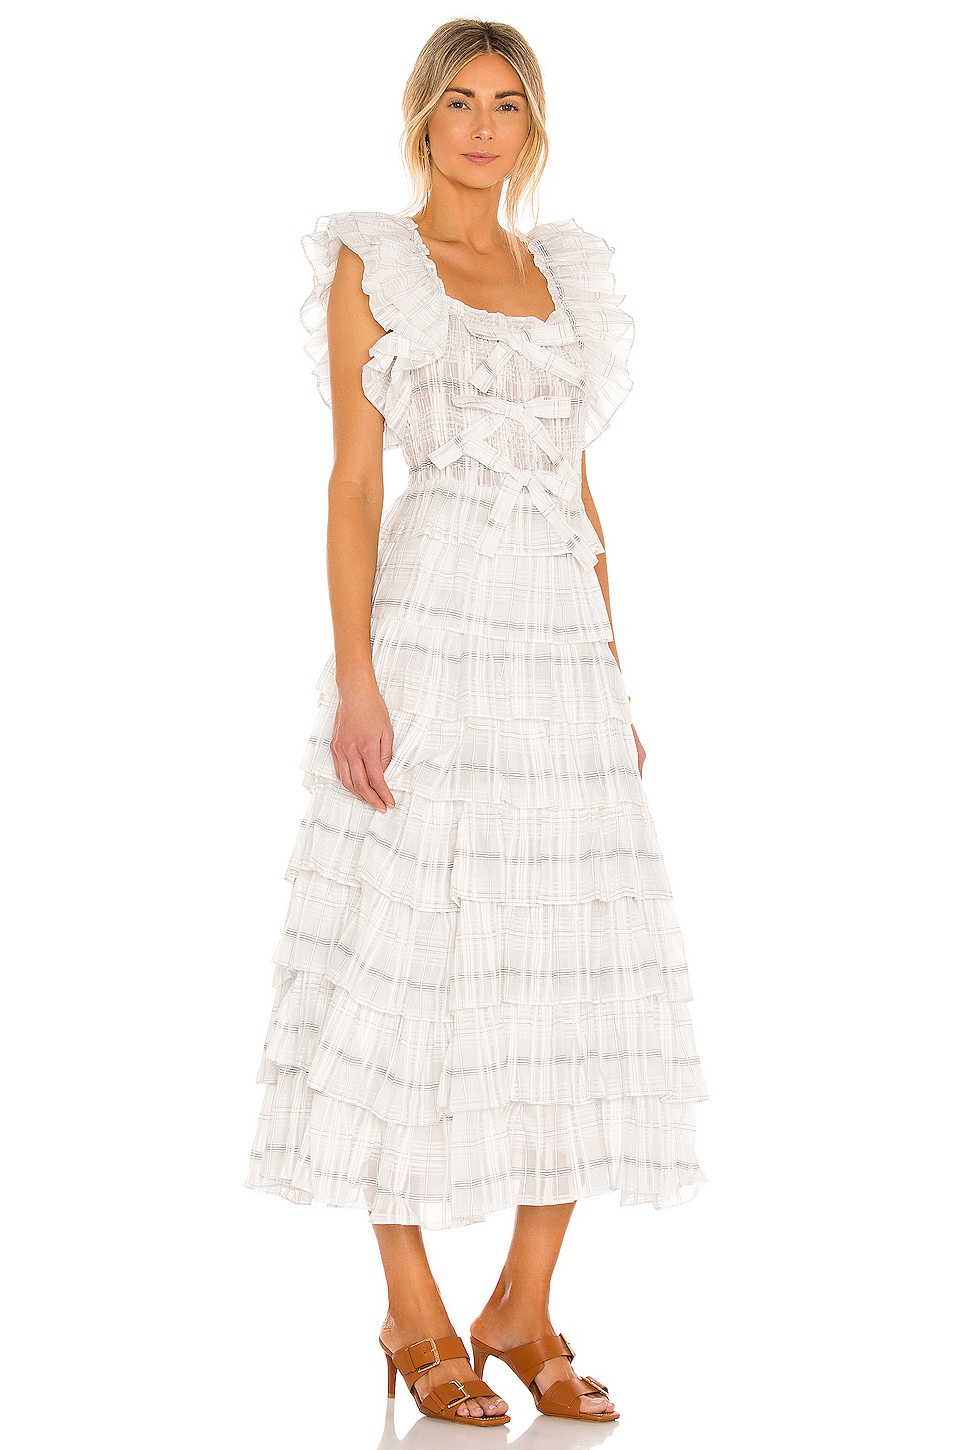 Ulla Johnson Darcey Dress in Blanc | REVOLVE